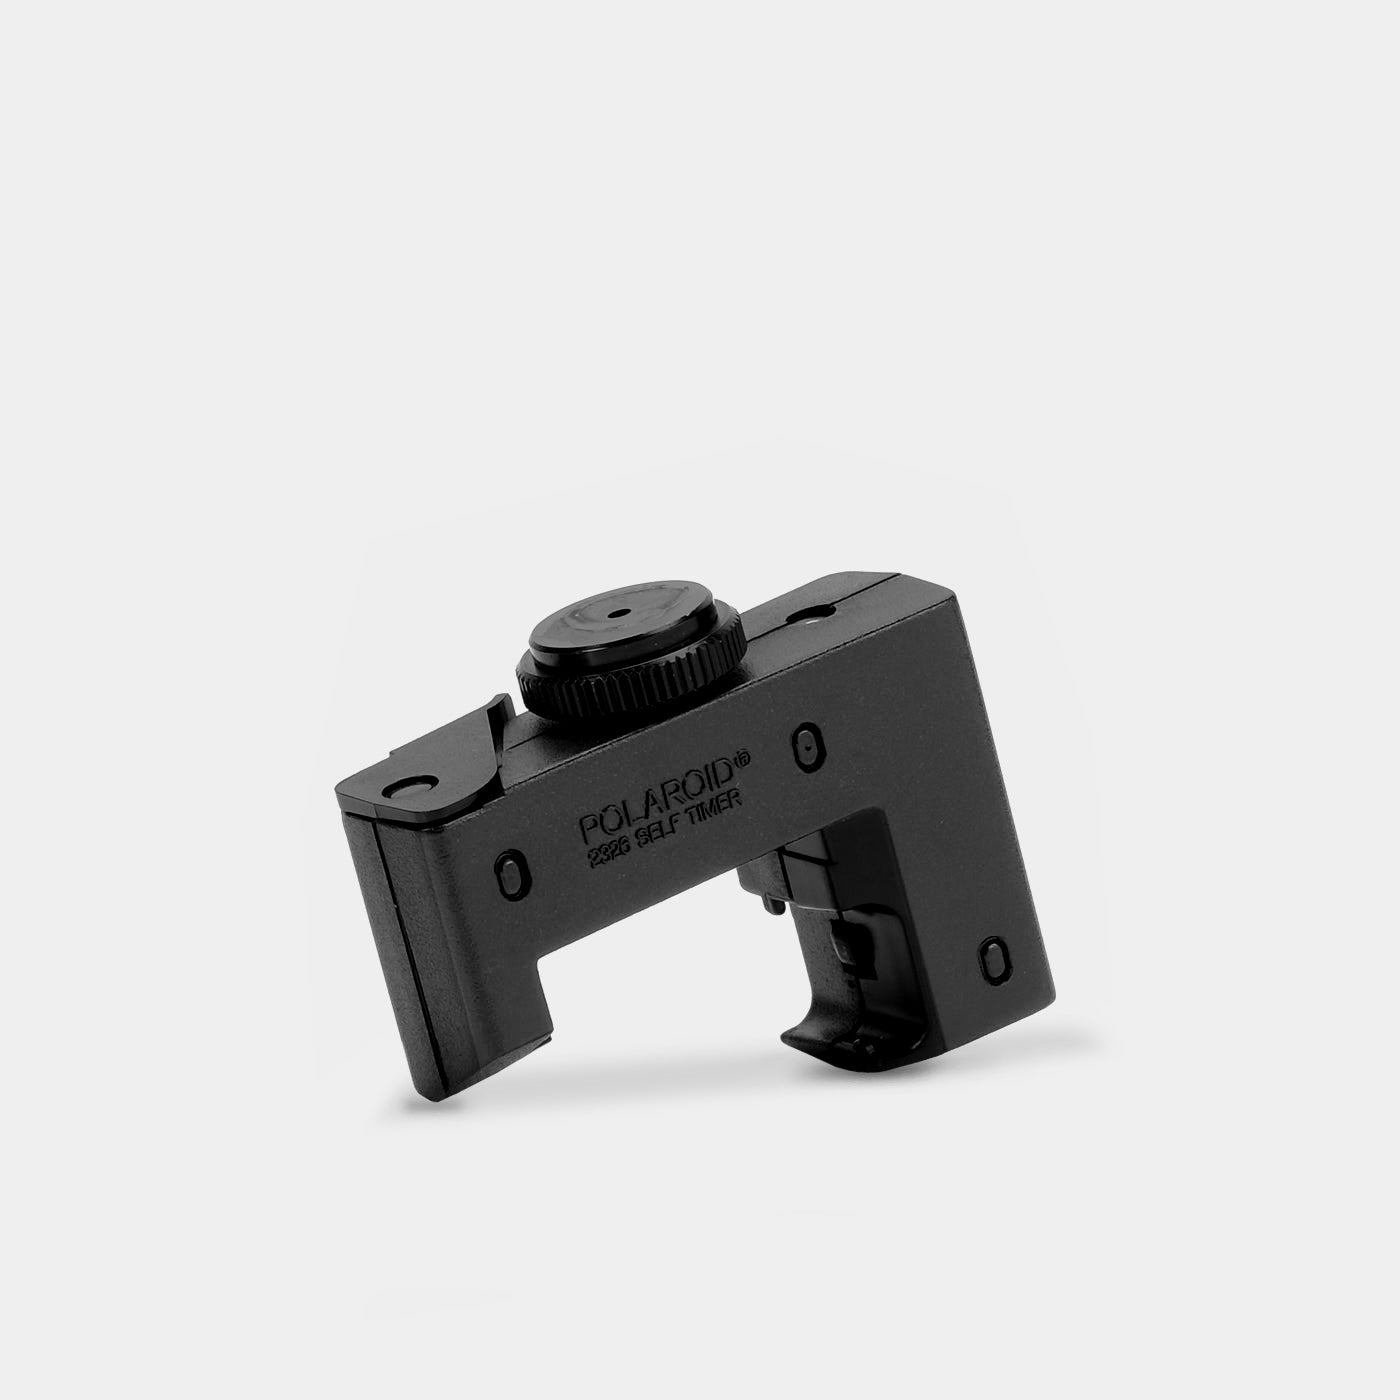 Polaroid SX-70 Camera Self-Timer 2326